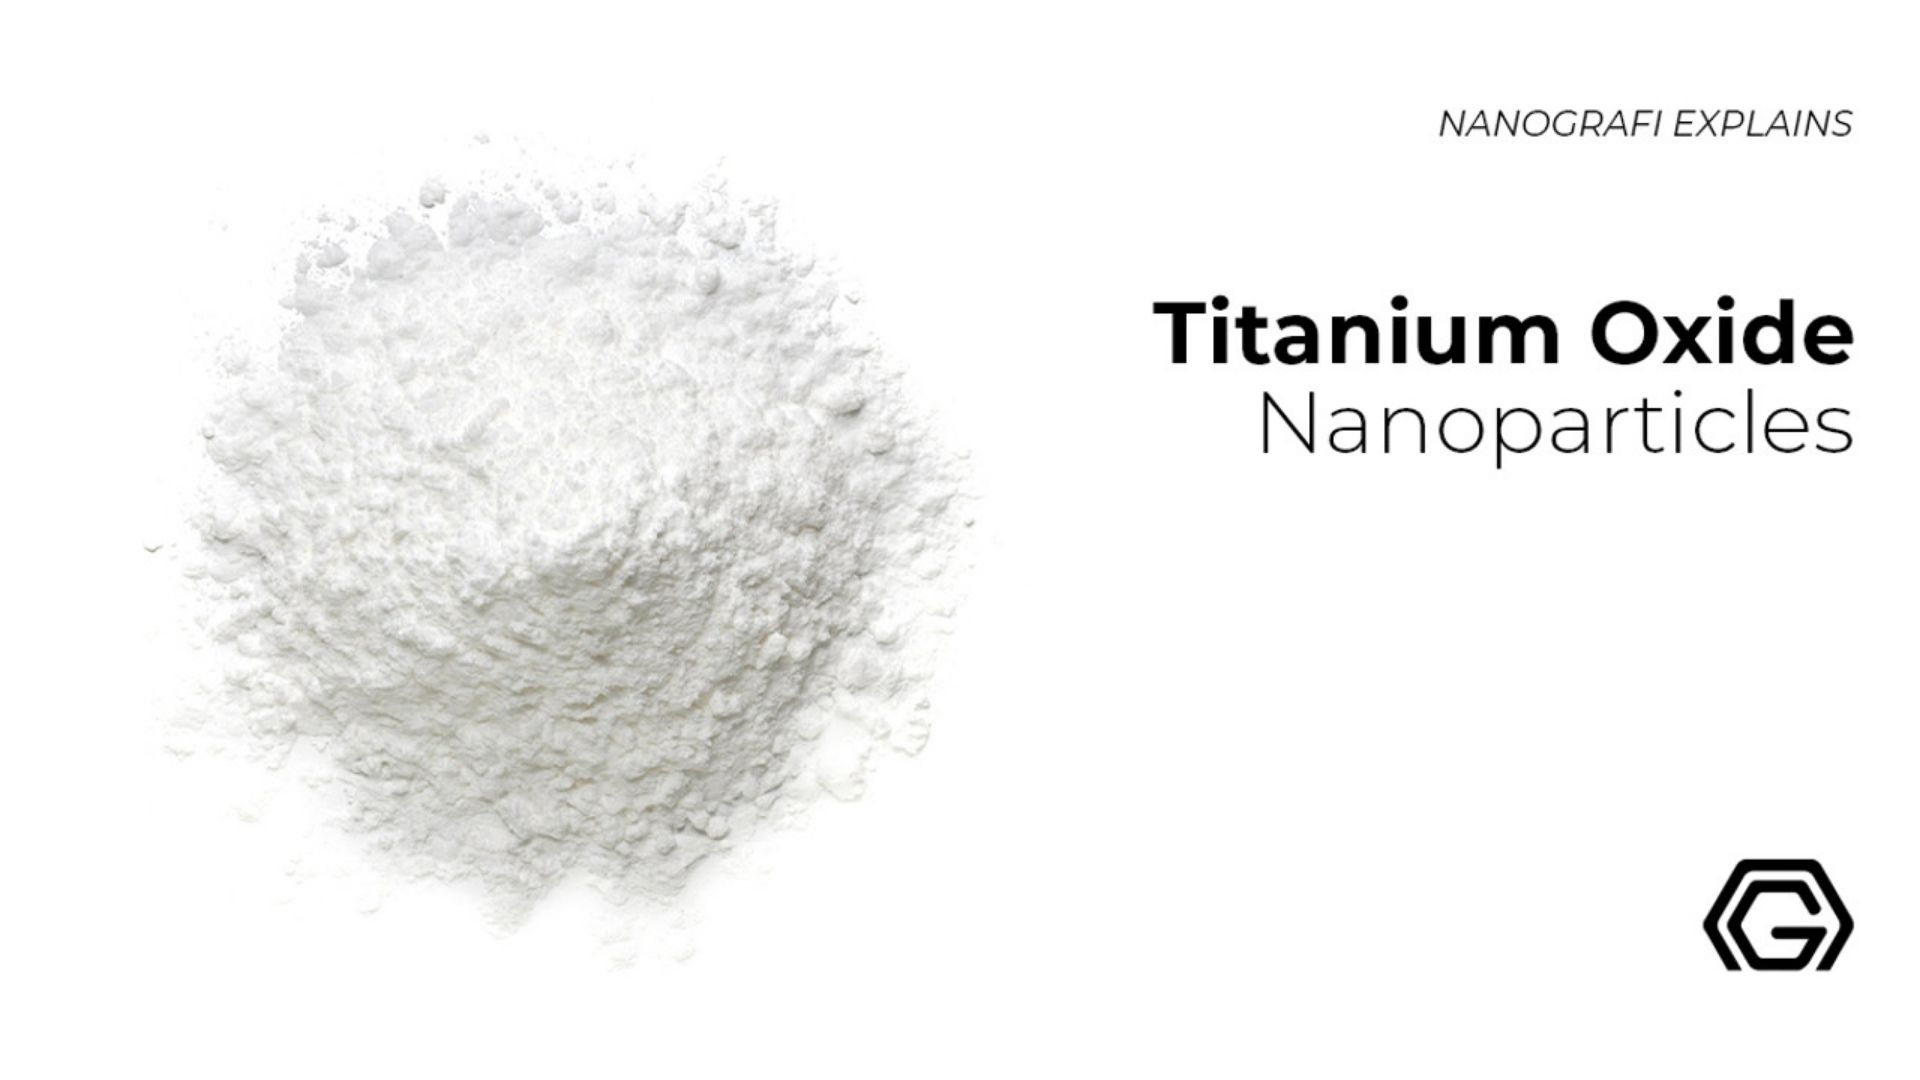 Titanium oxide nanoparticles